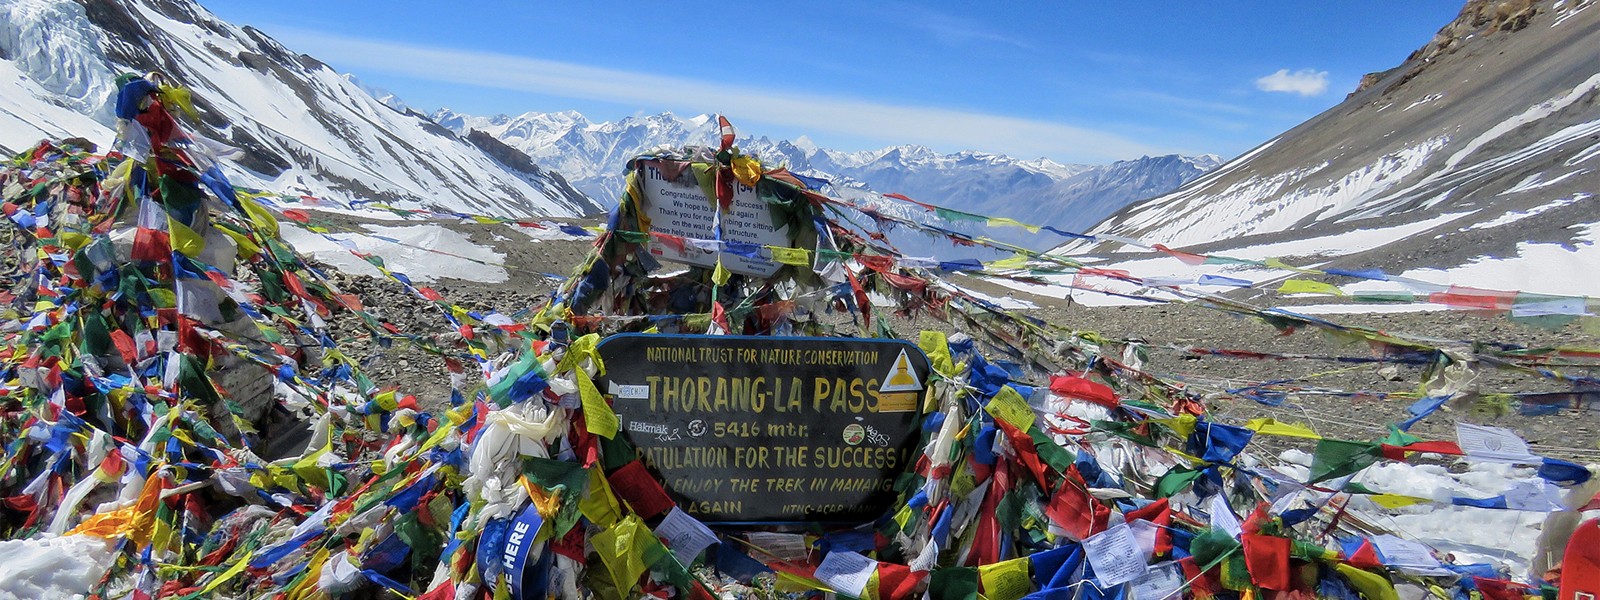 Thorung Peak Expedition - Thorung-La Pass